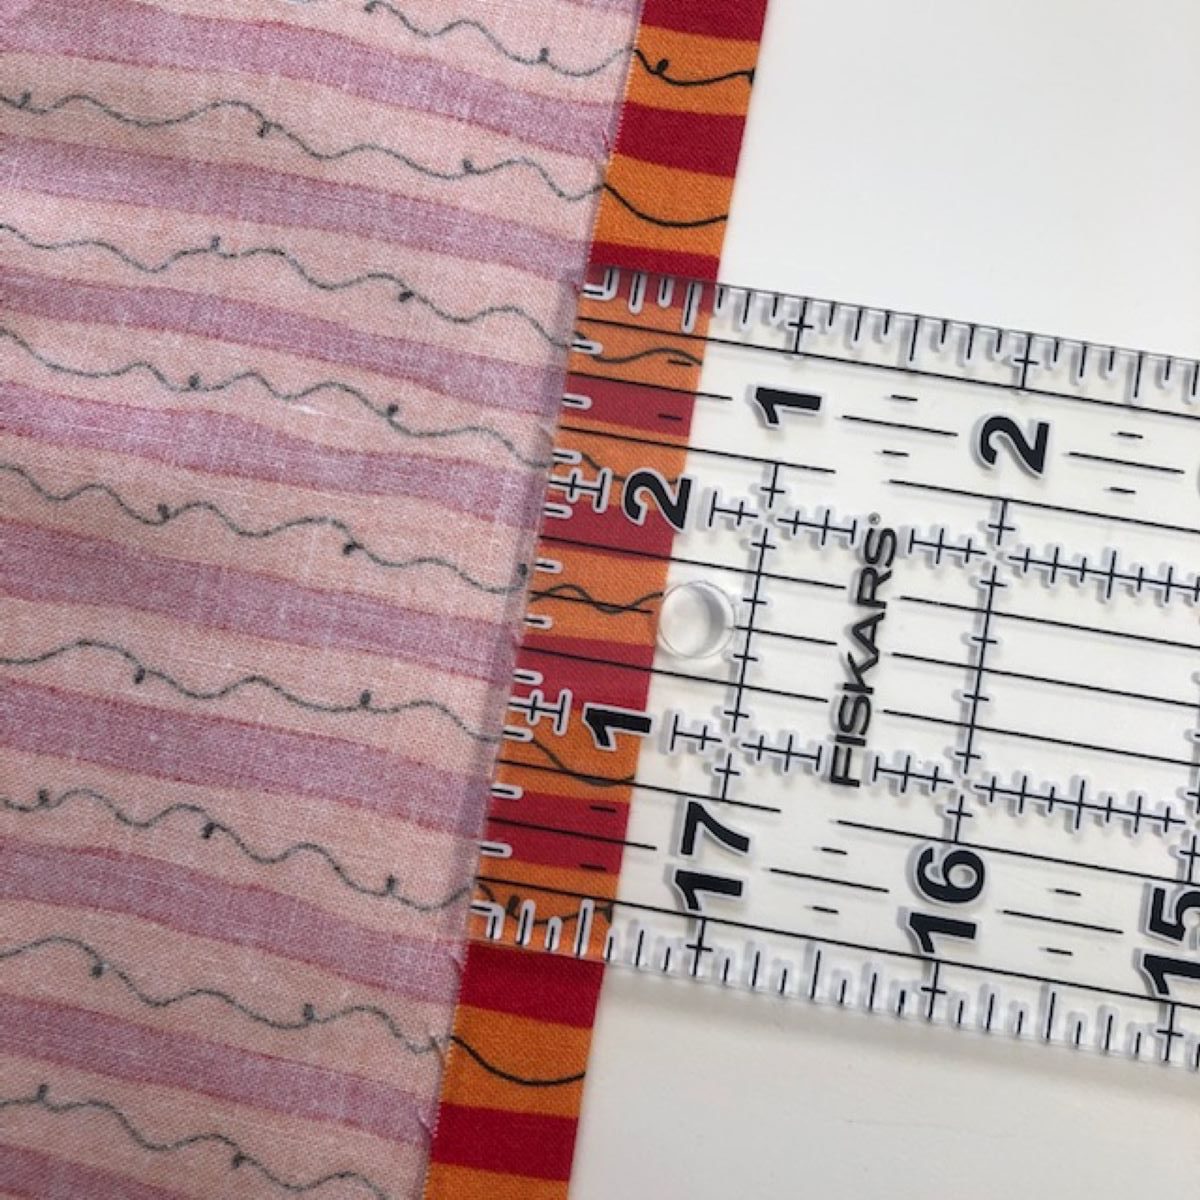 Matching Fabric Pattern Tutorial: press seam allowance